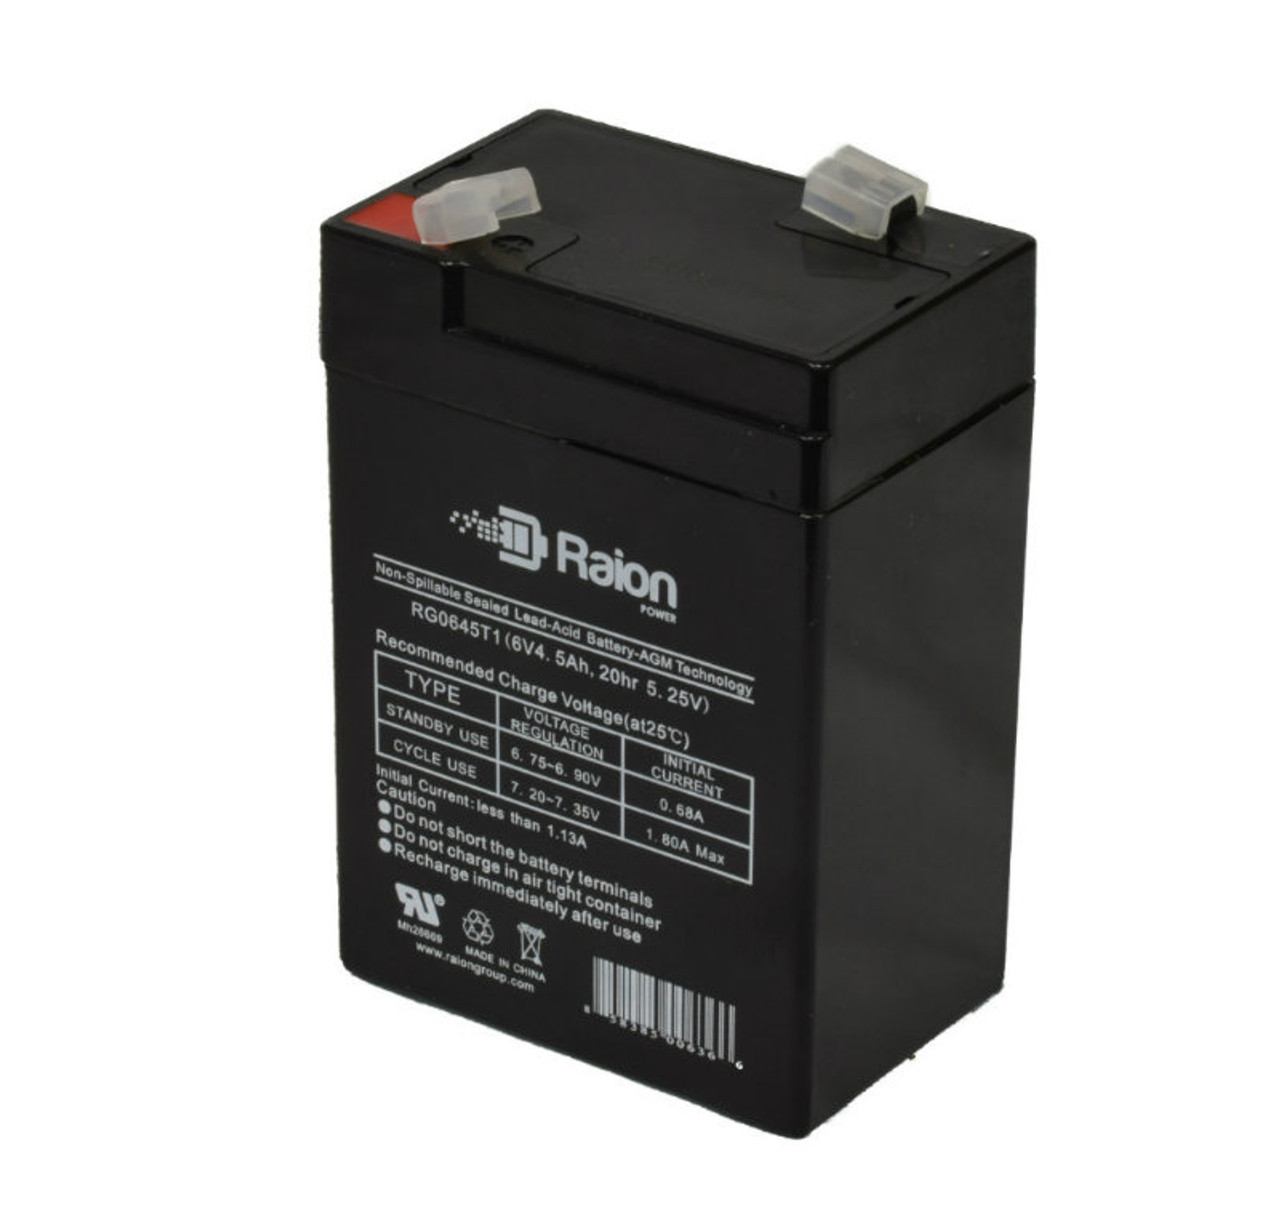 Raion Power RG0645T1 6V 4.5Ah Replacement Battery Cartridge for Emergi-Lite JSM9